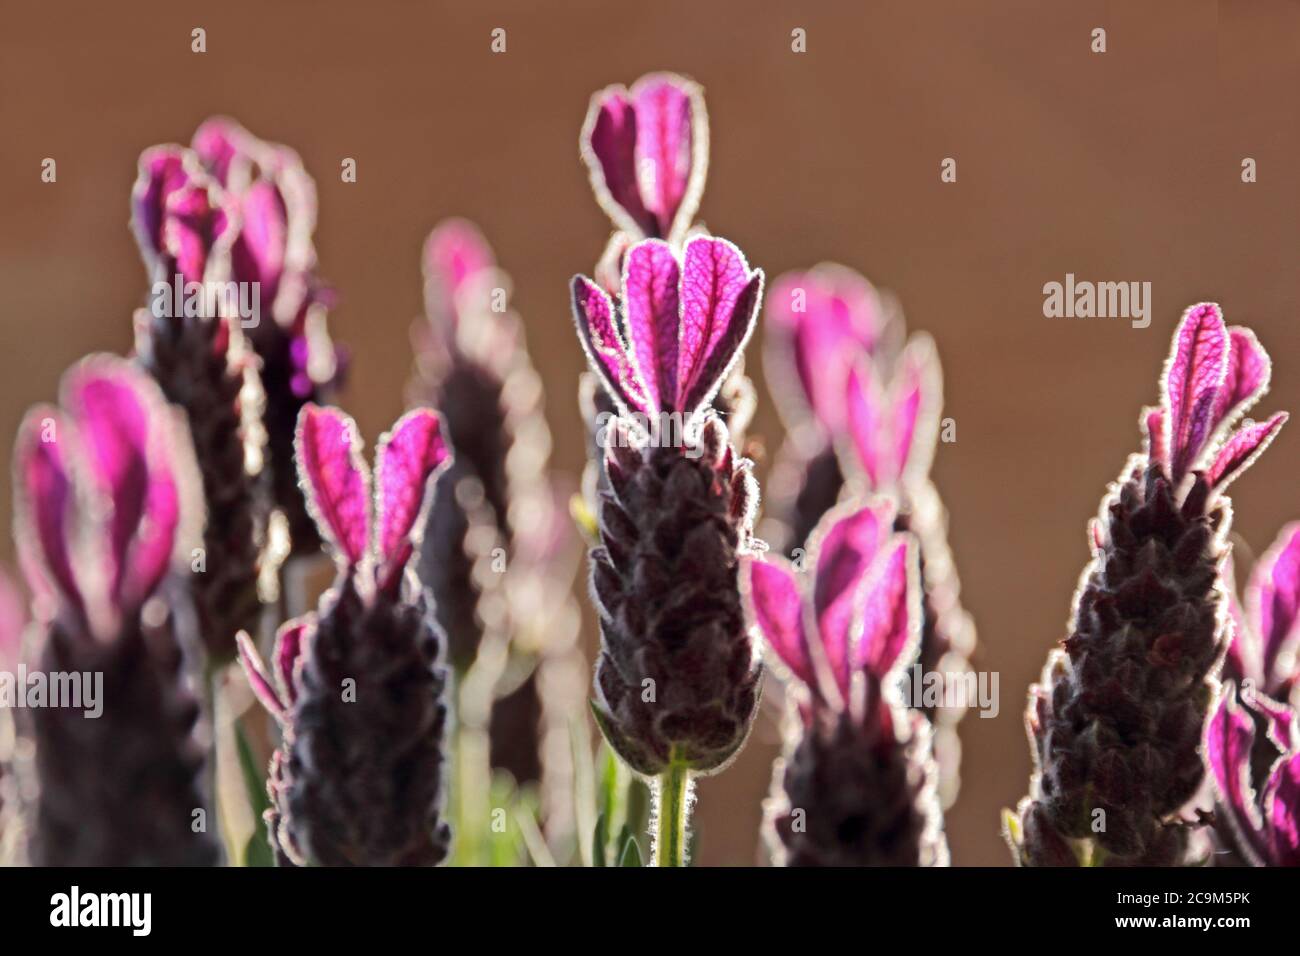 Lavender 'Lavandula stoechas Anouk' Stock Photo